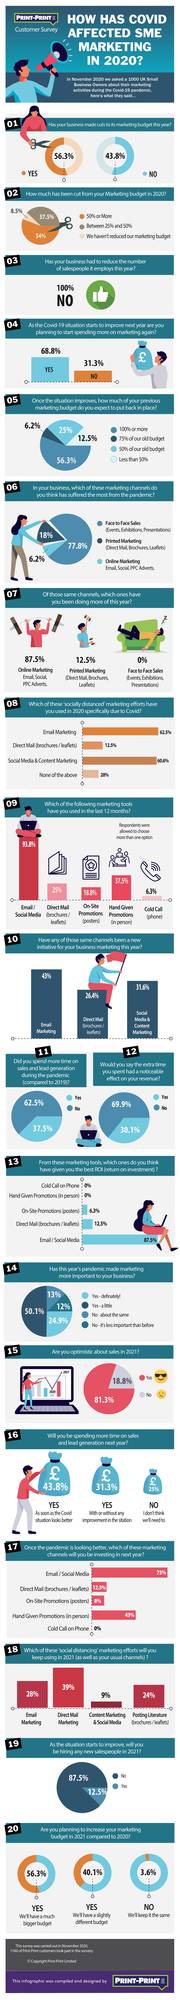 Print-Print.co.uk Marketing-Survey-Covid-2020-Infographic